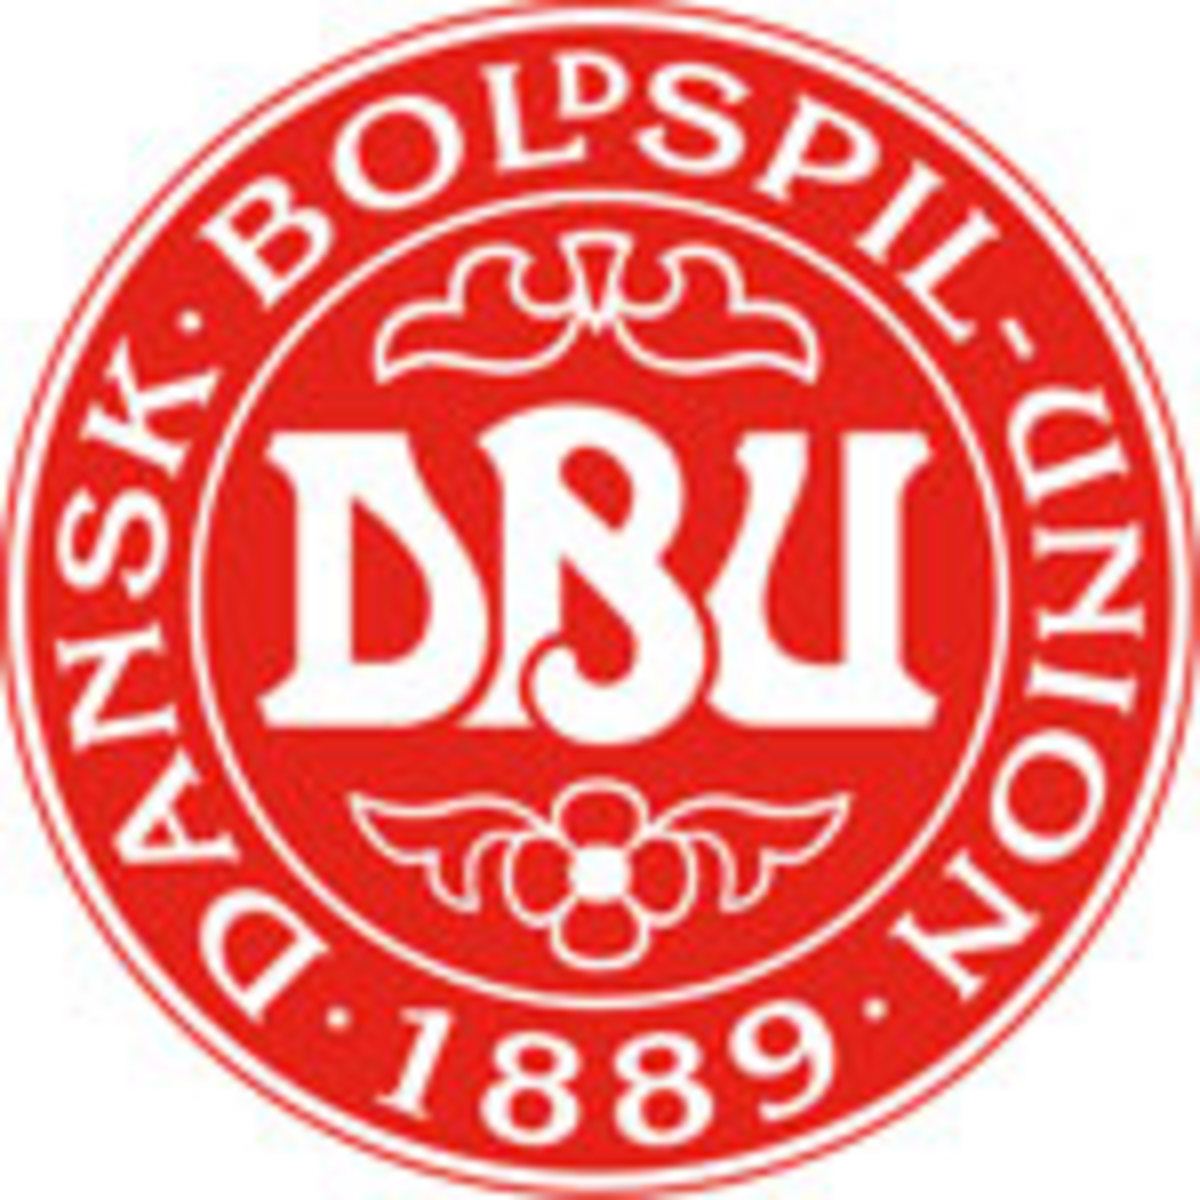 denmark-world-cup-logo.jpg